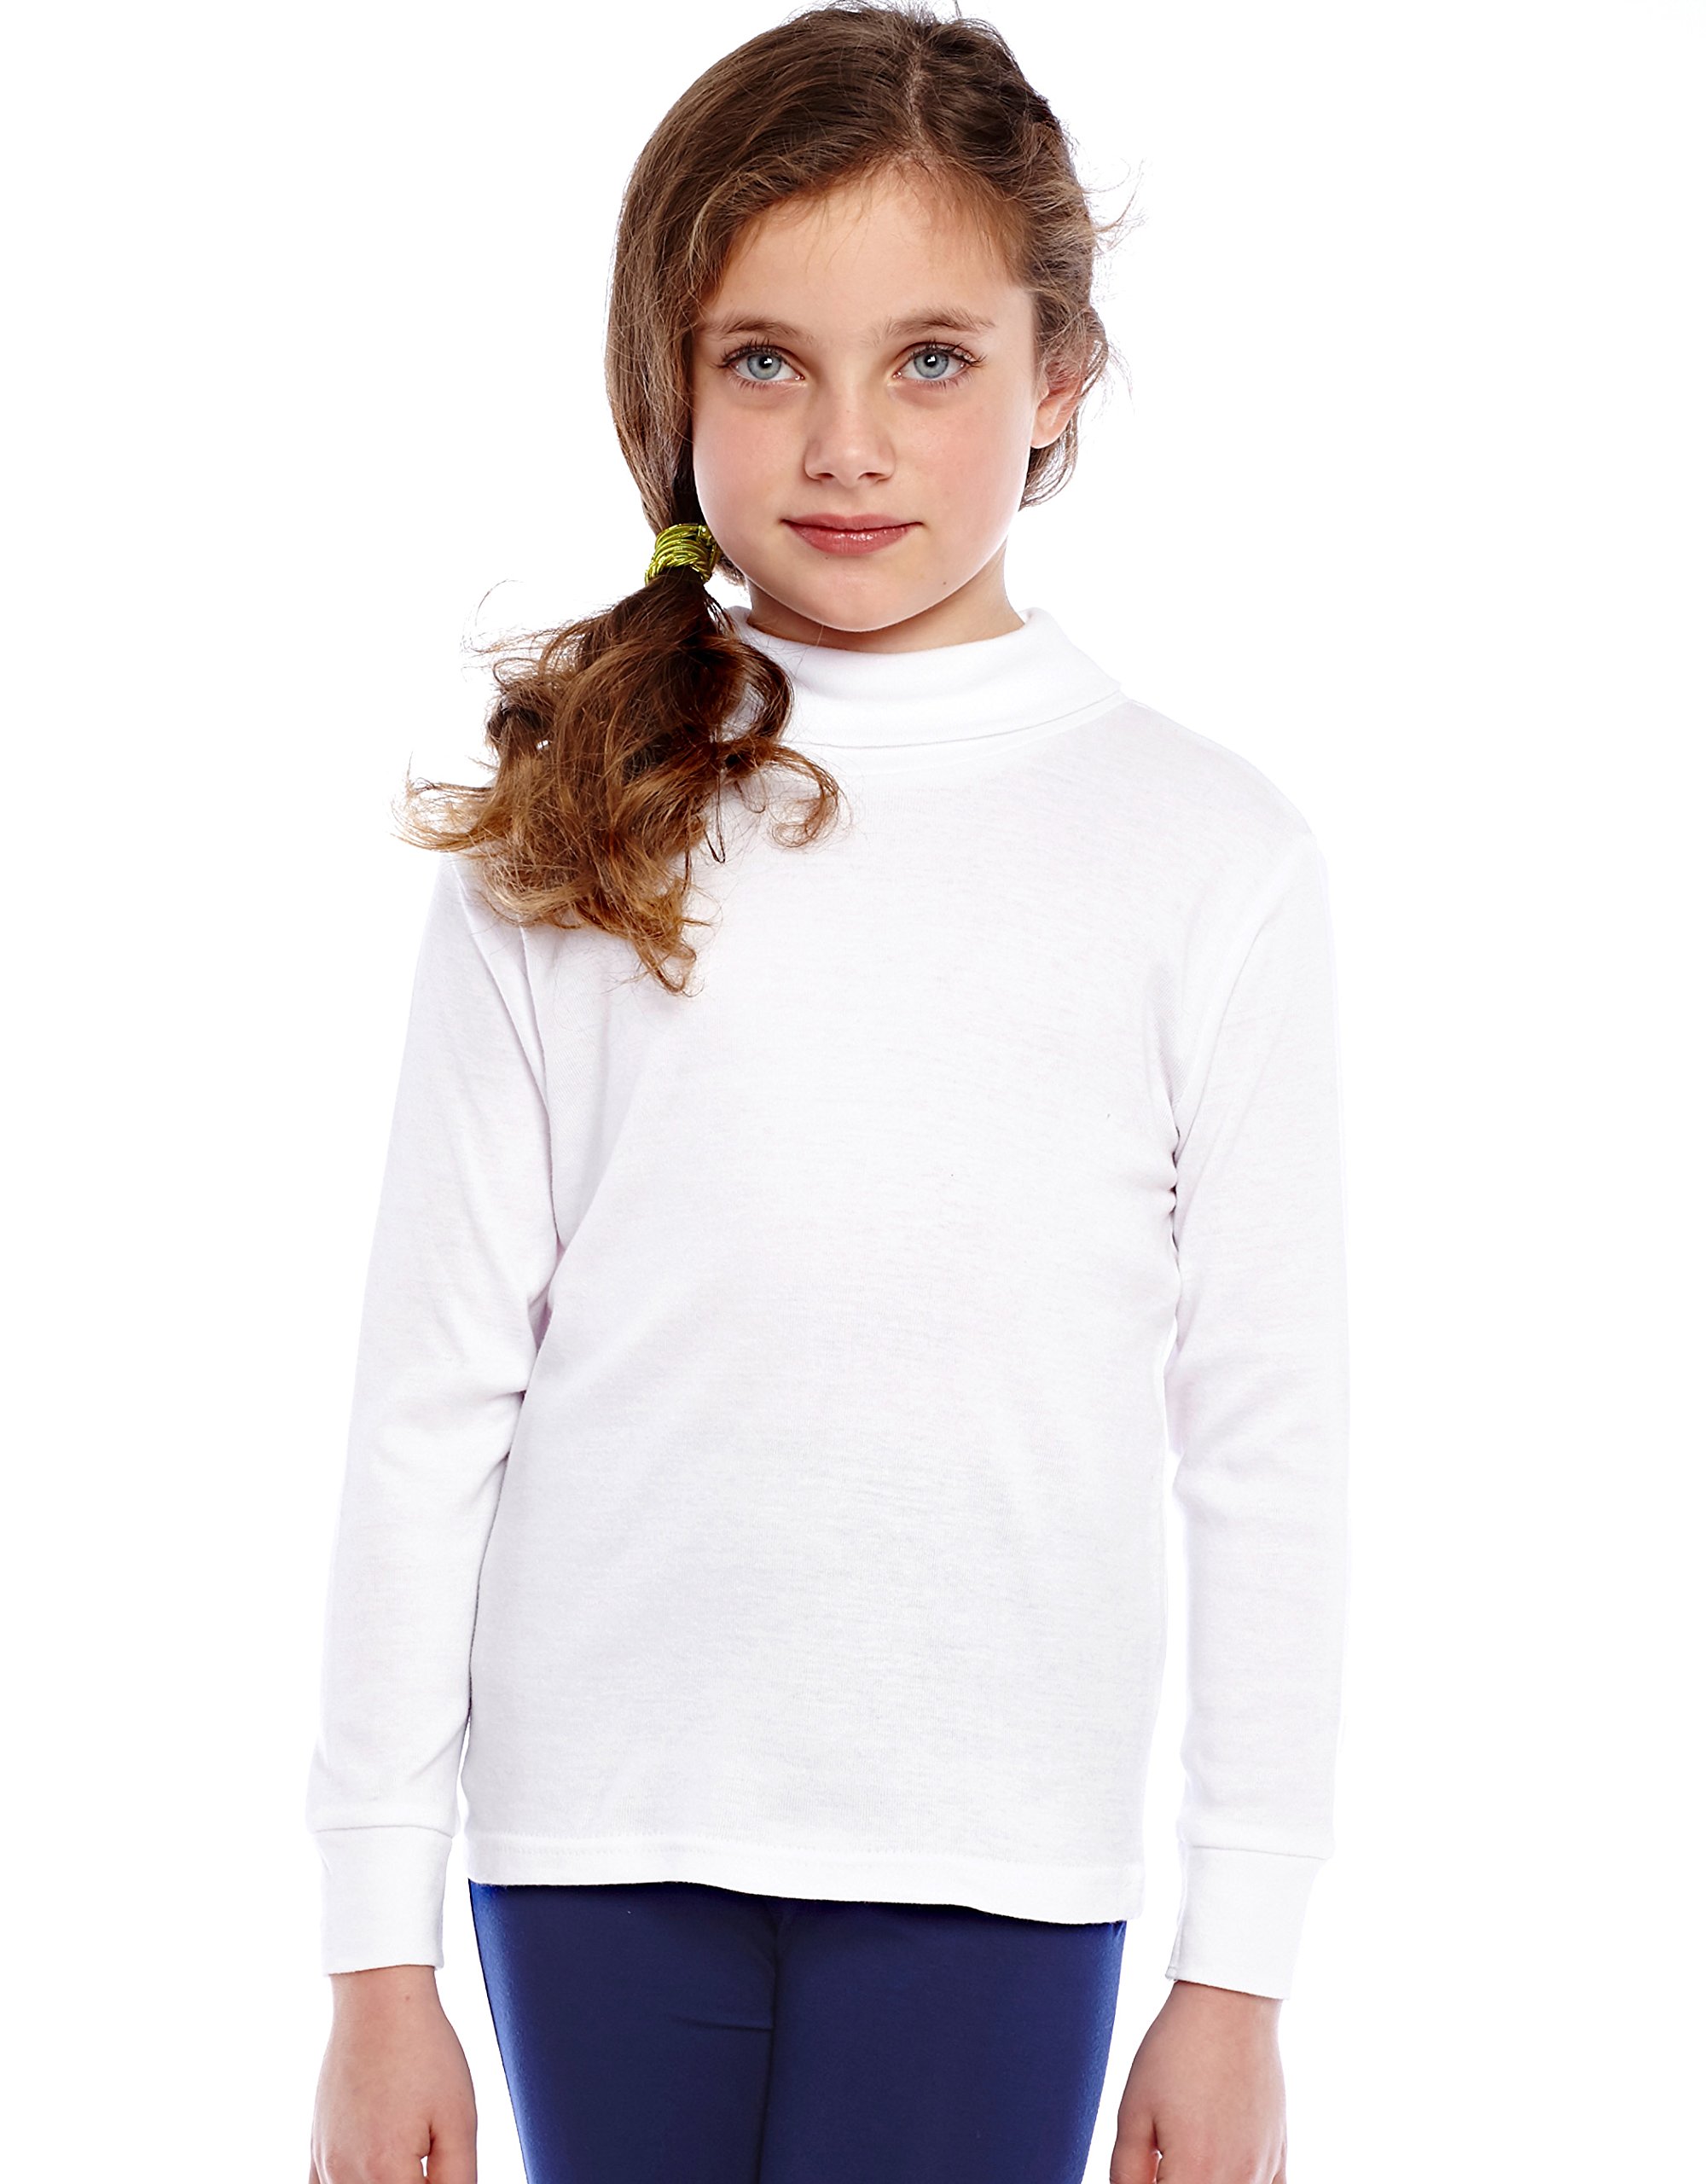 Leveret Girls Boys & Toddler Solid Turtleneck 100% Cotton Kids Shirt (Size 4 Toddler, White)